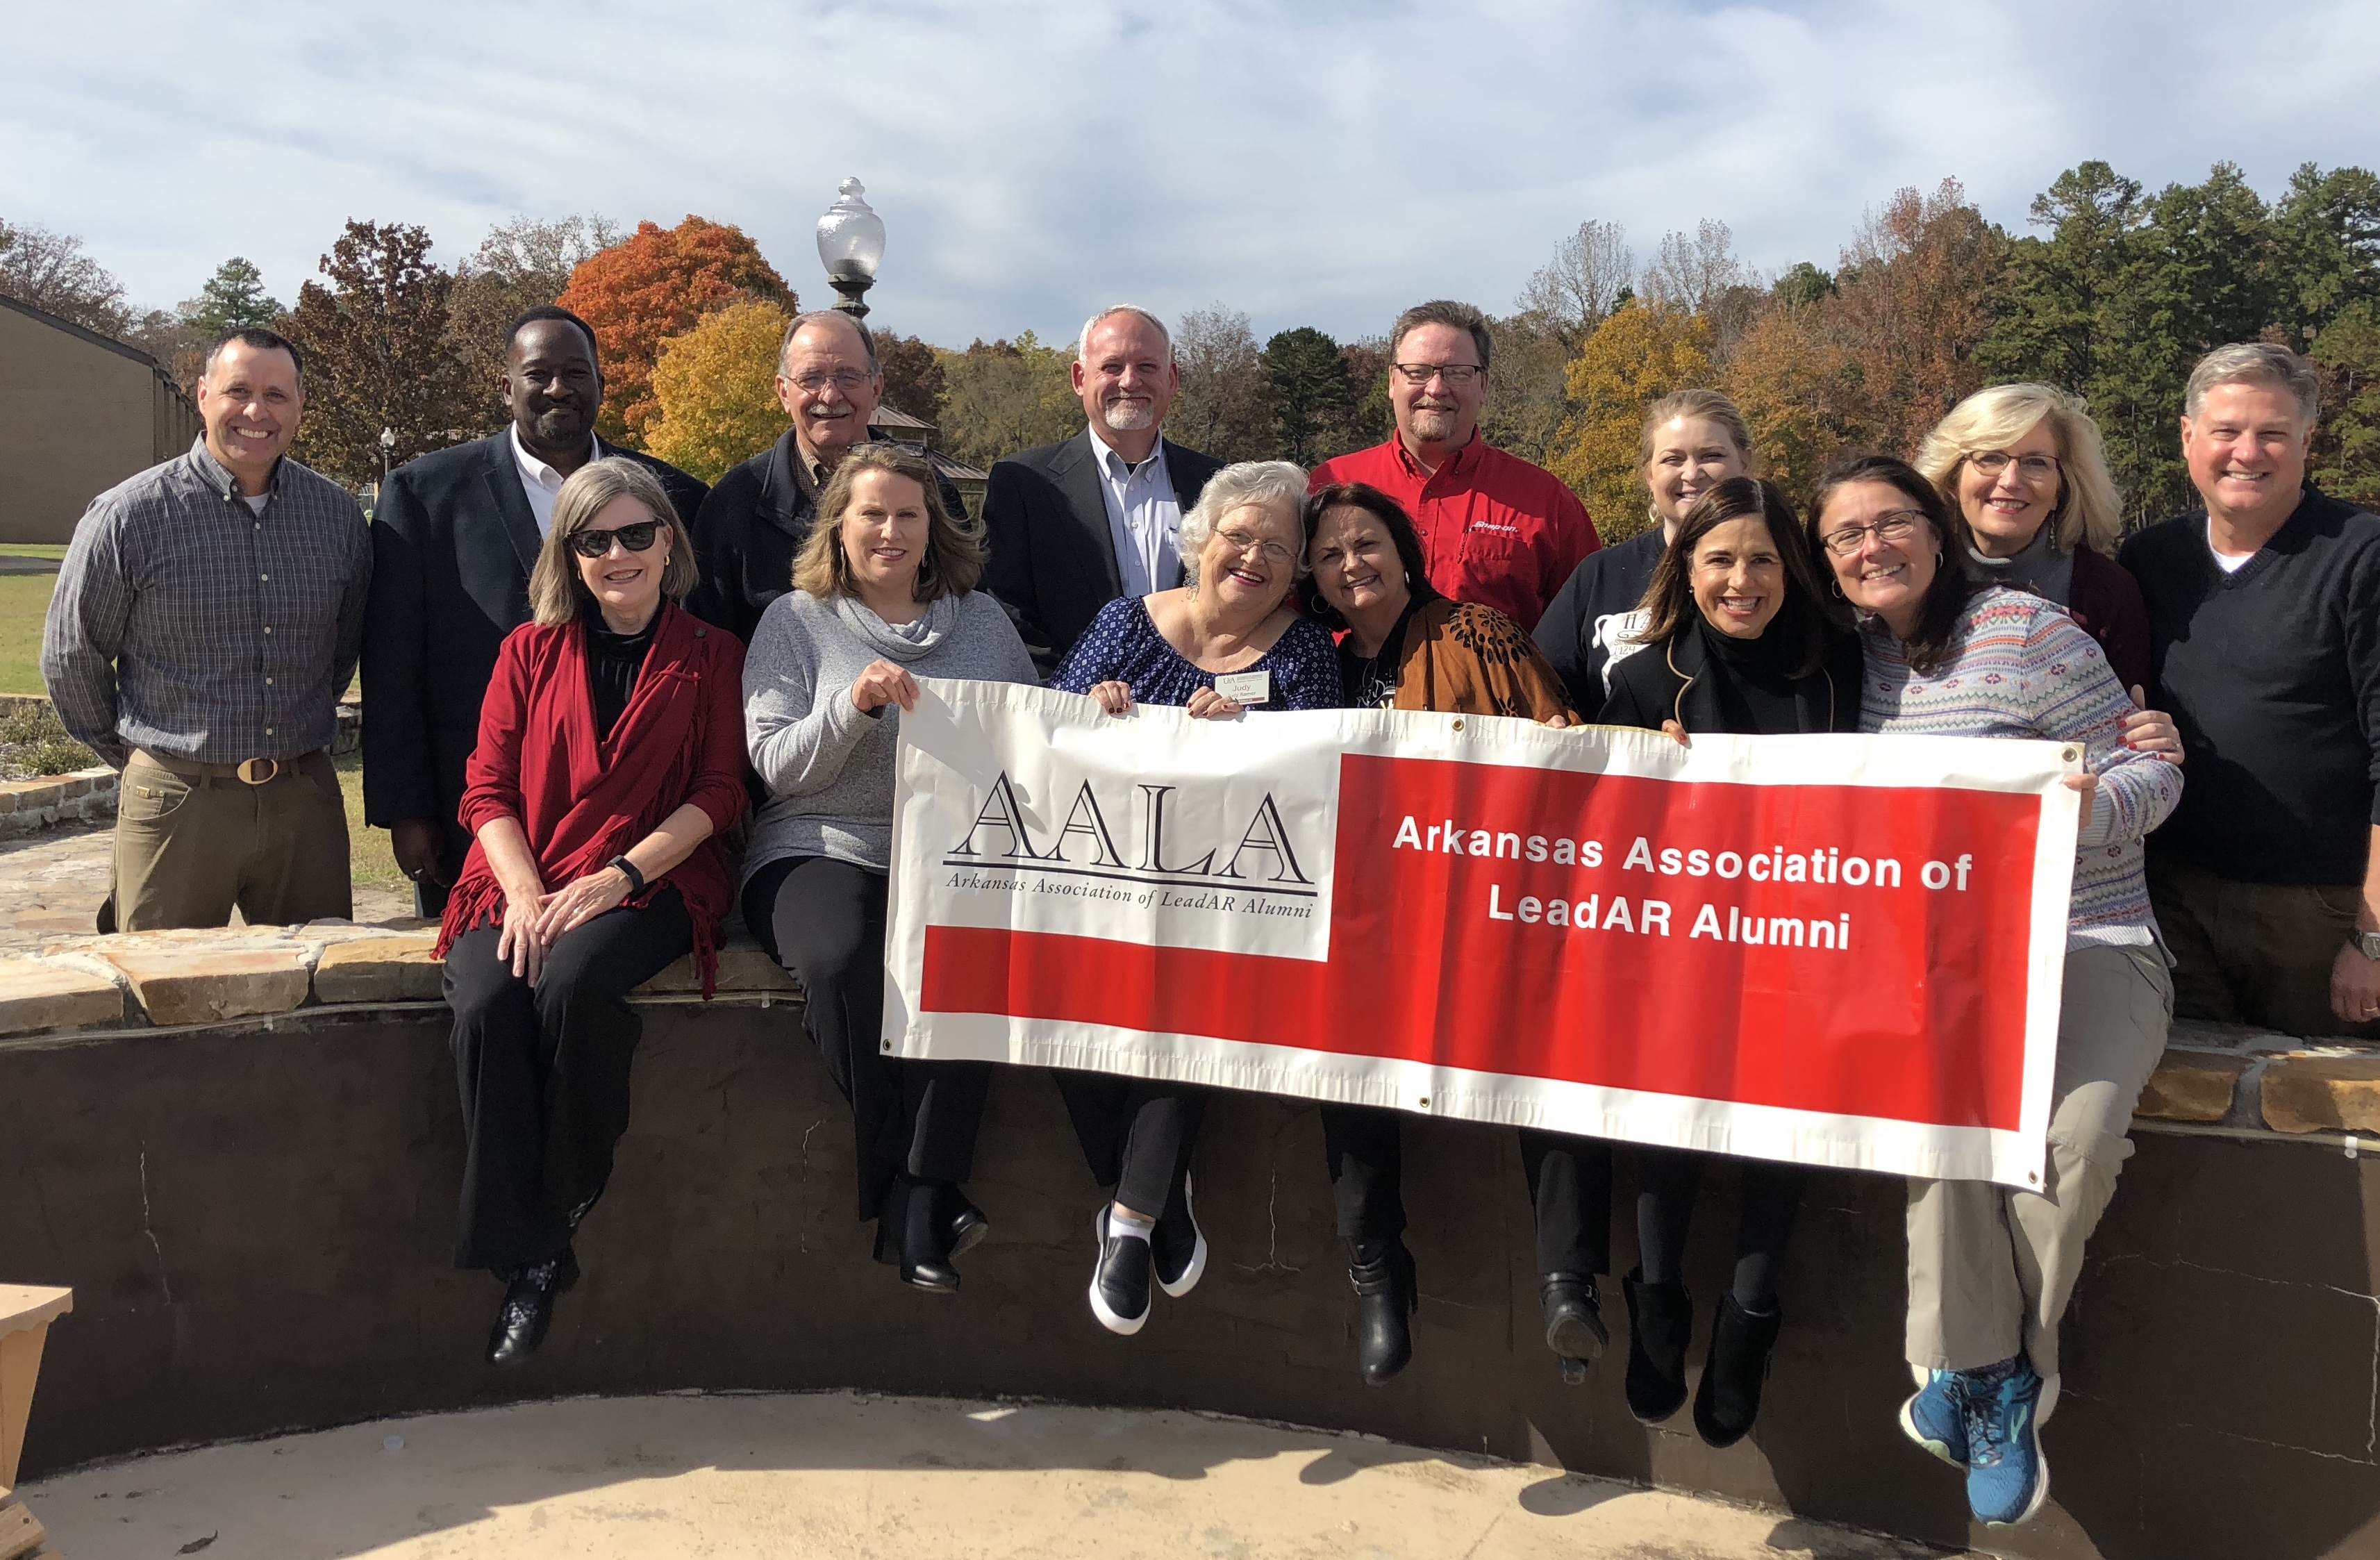 Arkansas Association of LeadAR Alumni group photo at November 3 2018 meeting